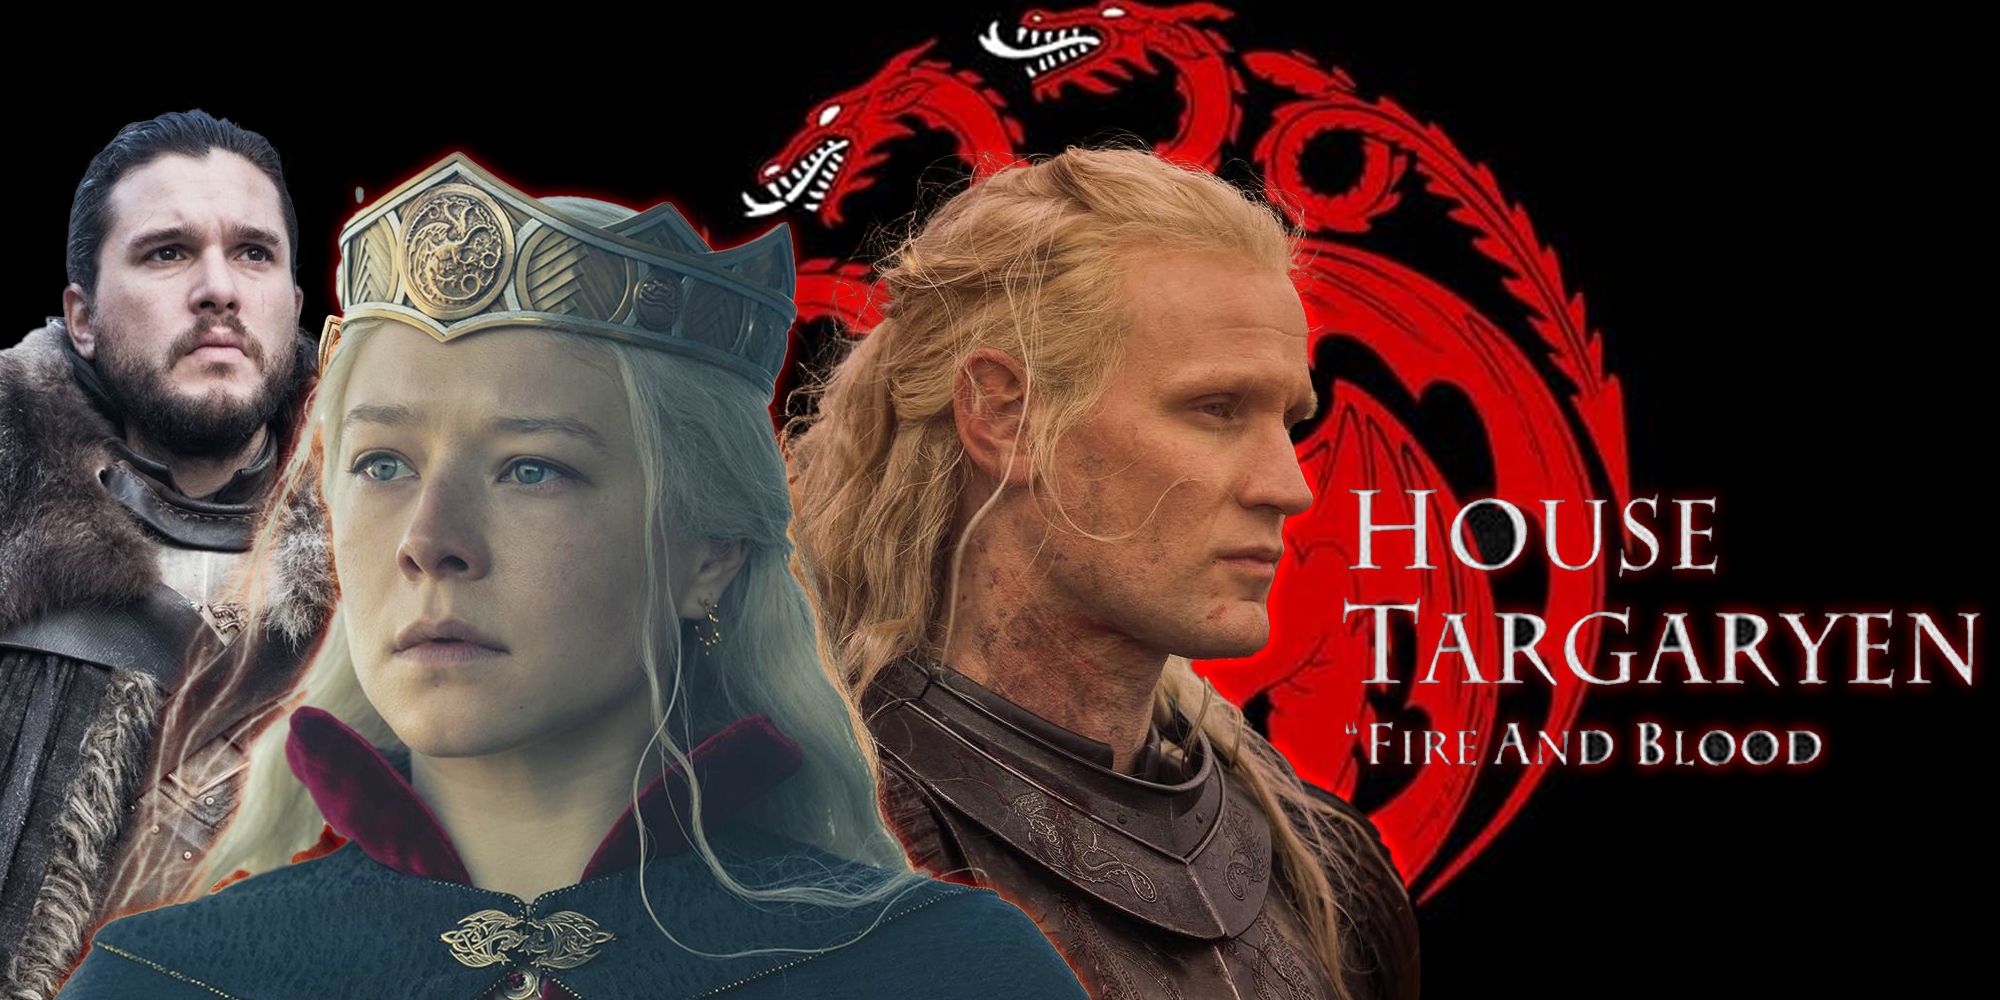 House Targaryen feature image with Jon Snow, Rhaenyra and Daemon